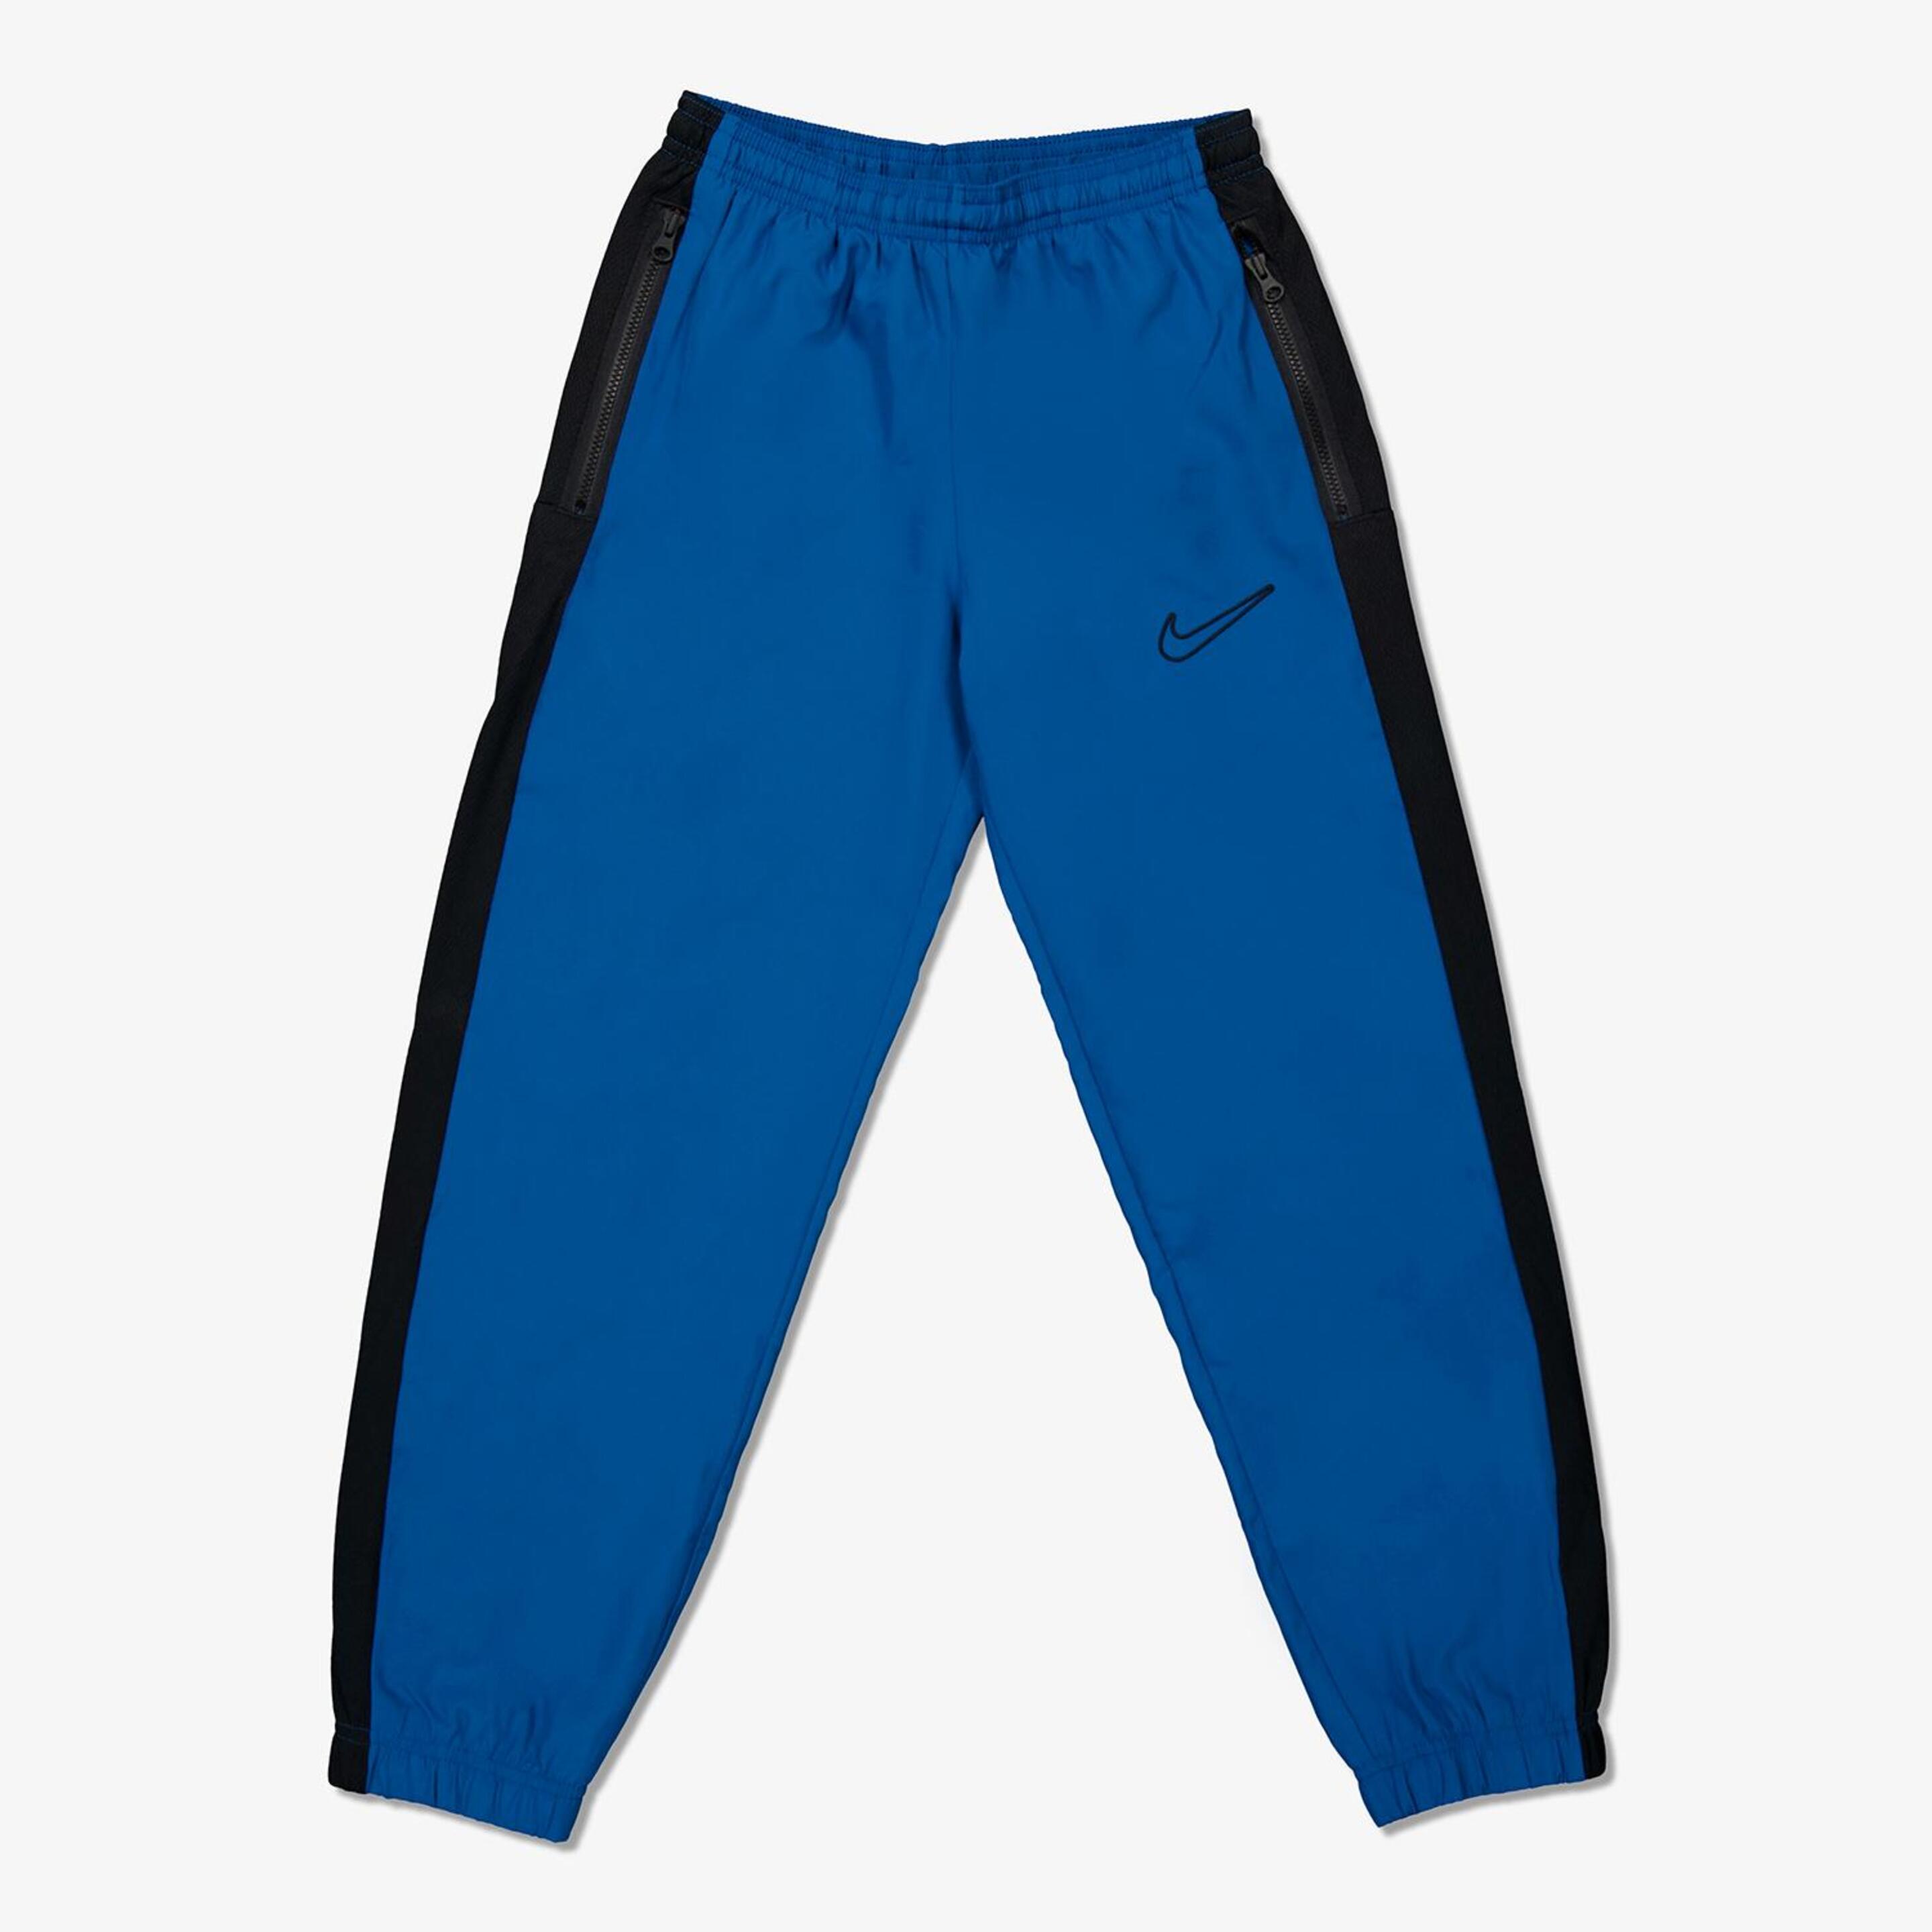 Nike Acd23 - azul - Calças Futebol Rapaz